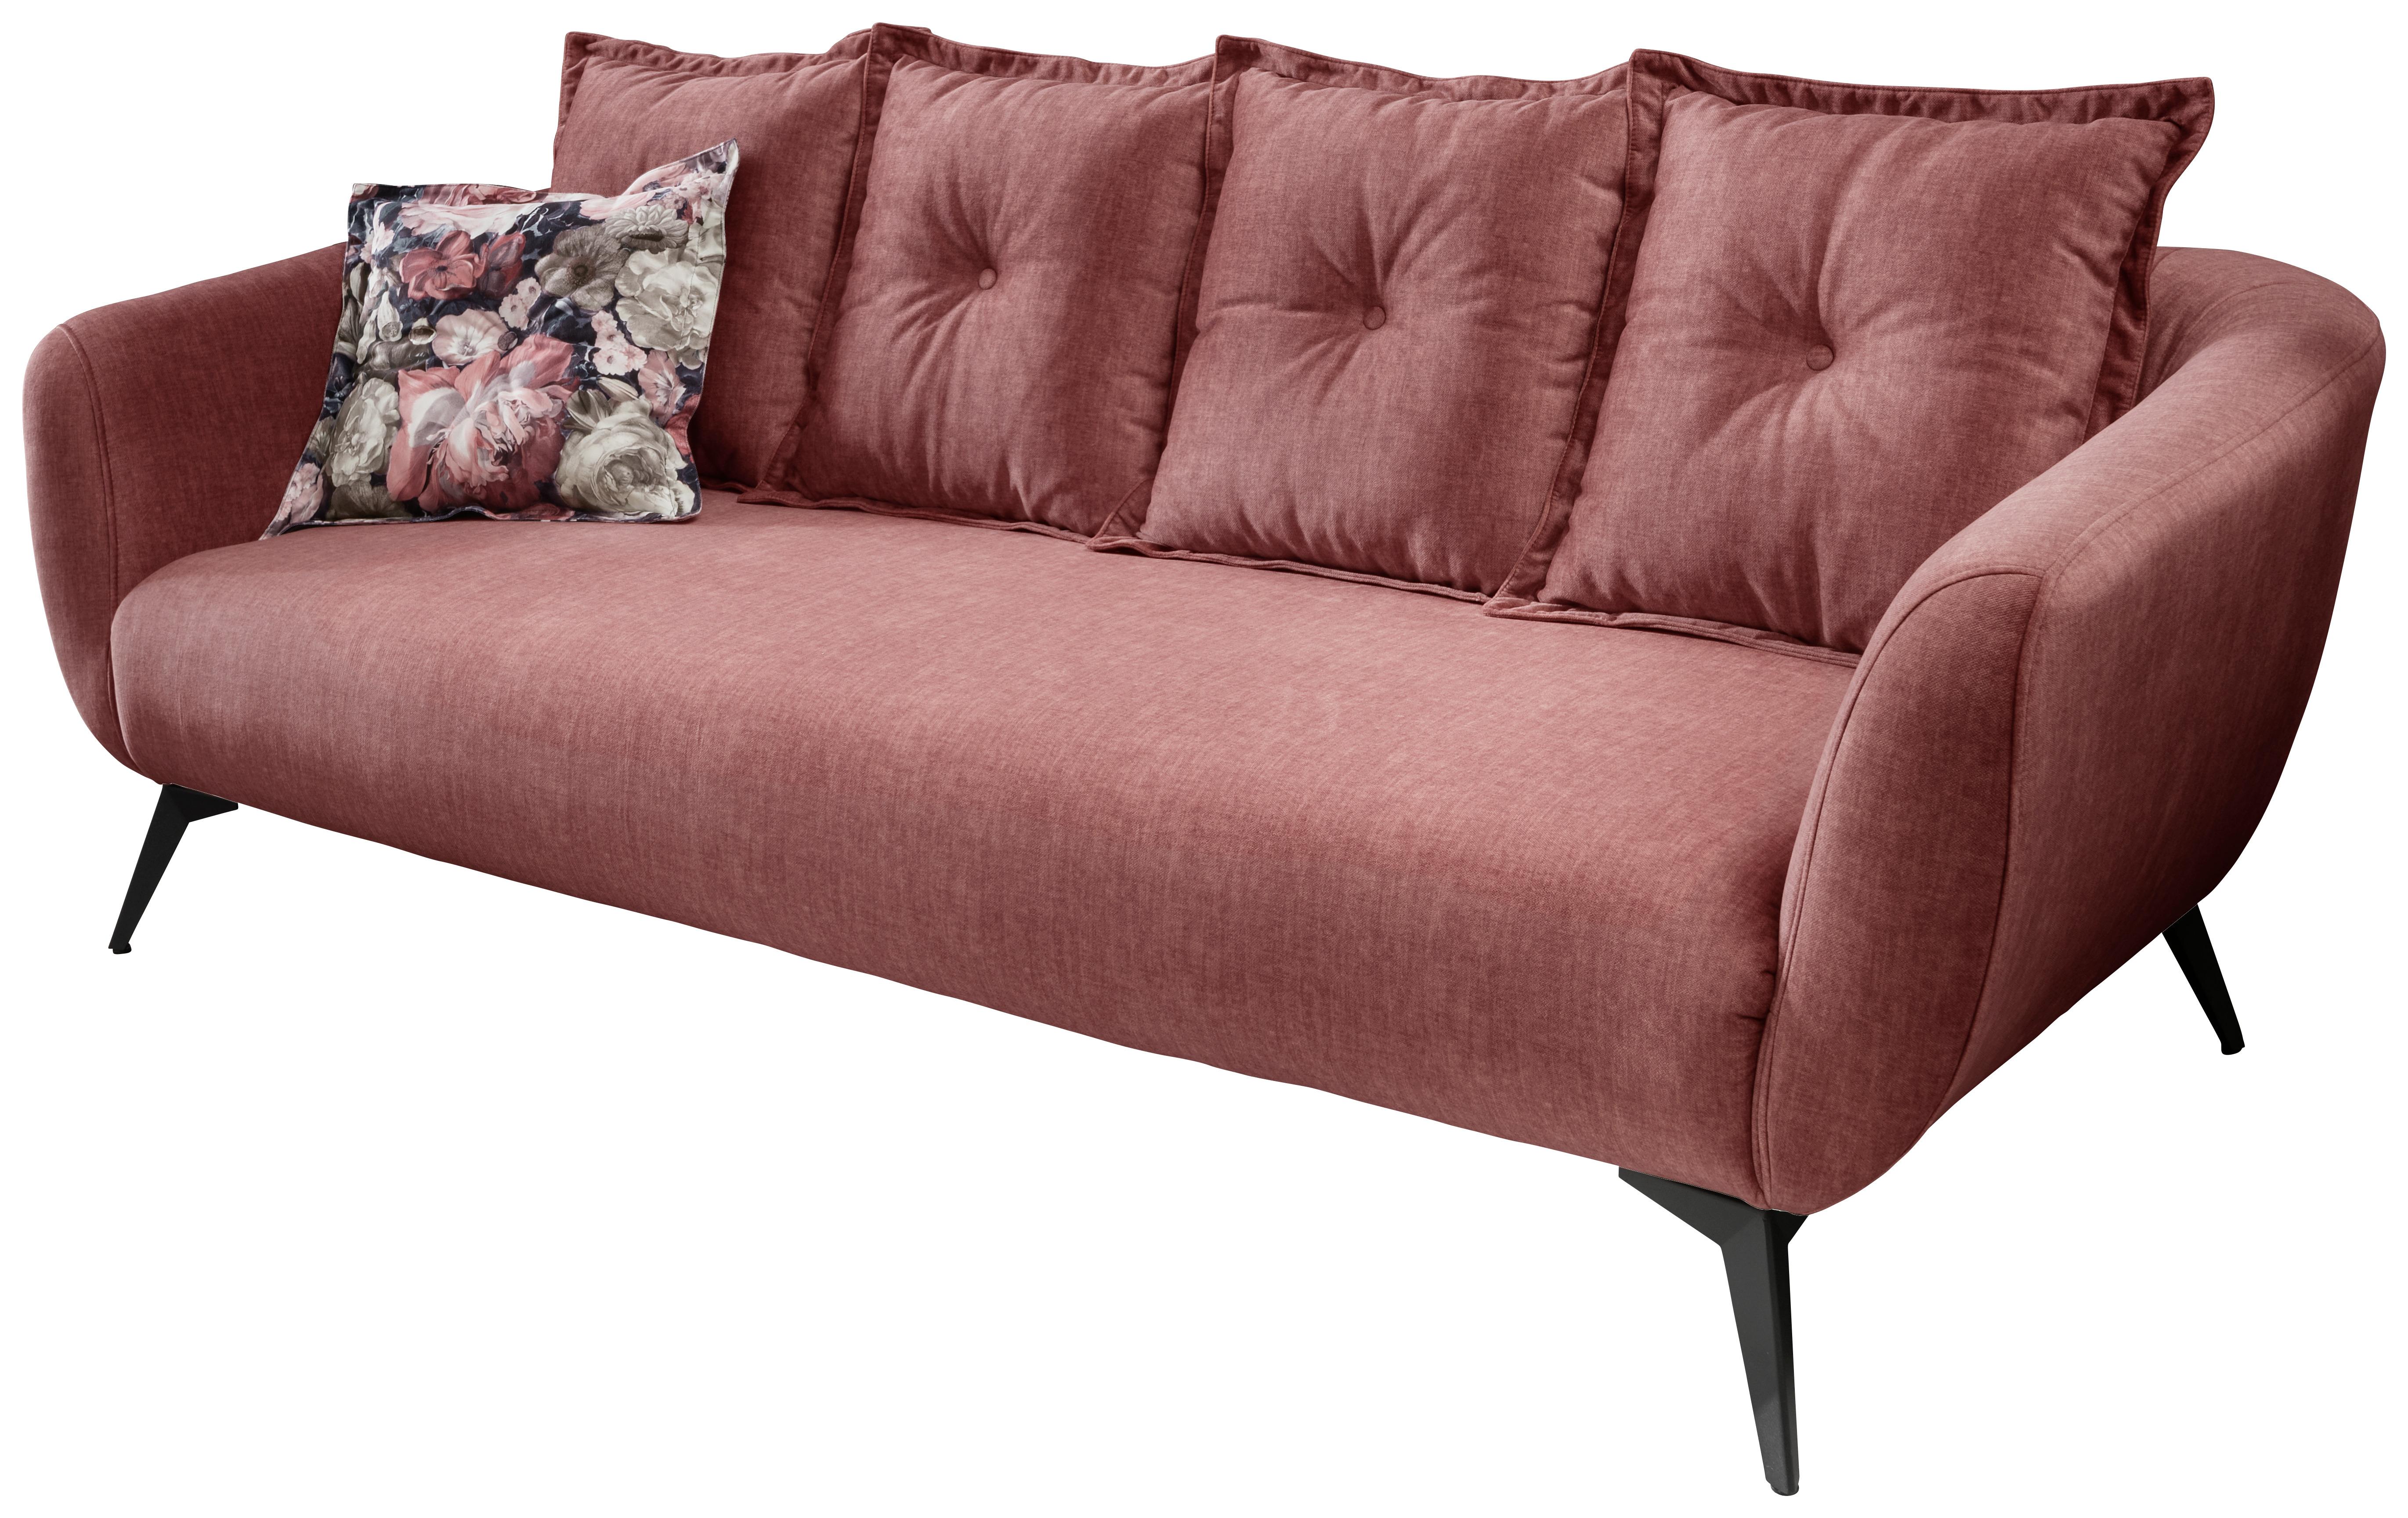 3-Sitzer-Sofa Baggio mit Kissen Koralle - Koralle/Multicolor, MODERN, Holz/Textil (236/94/103cm) - Livetastic